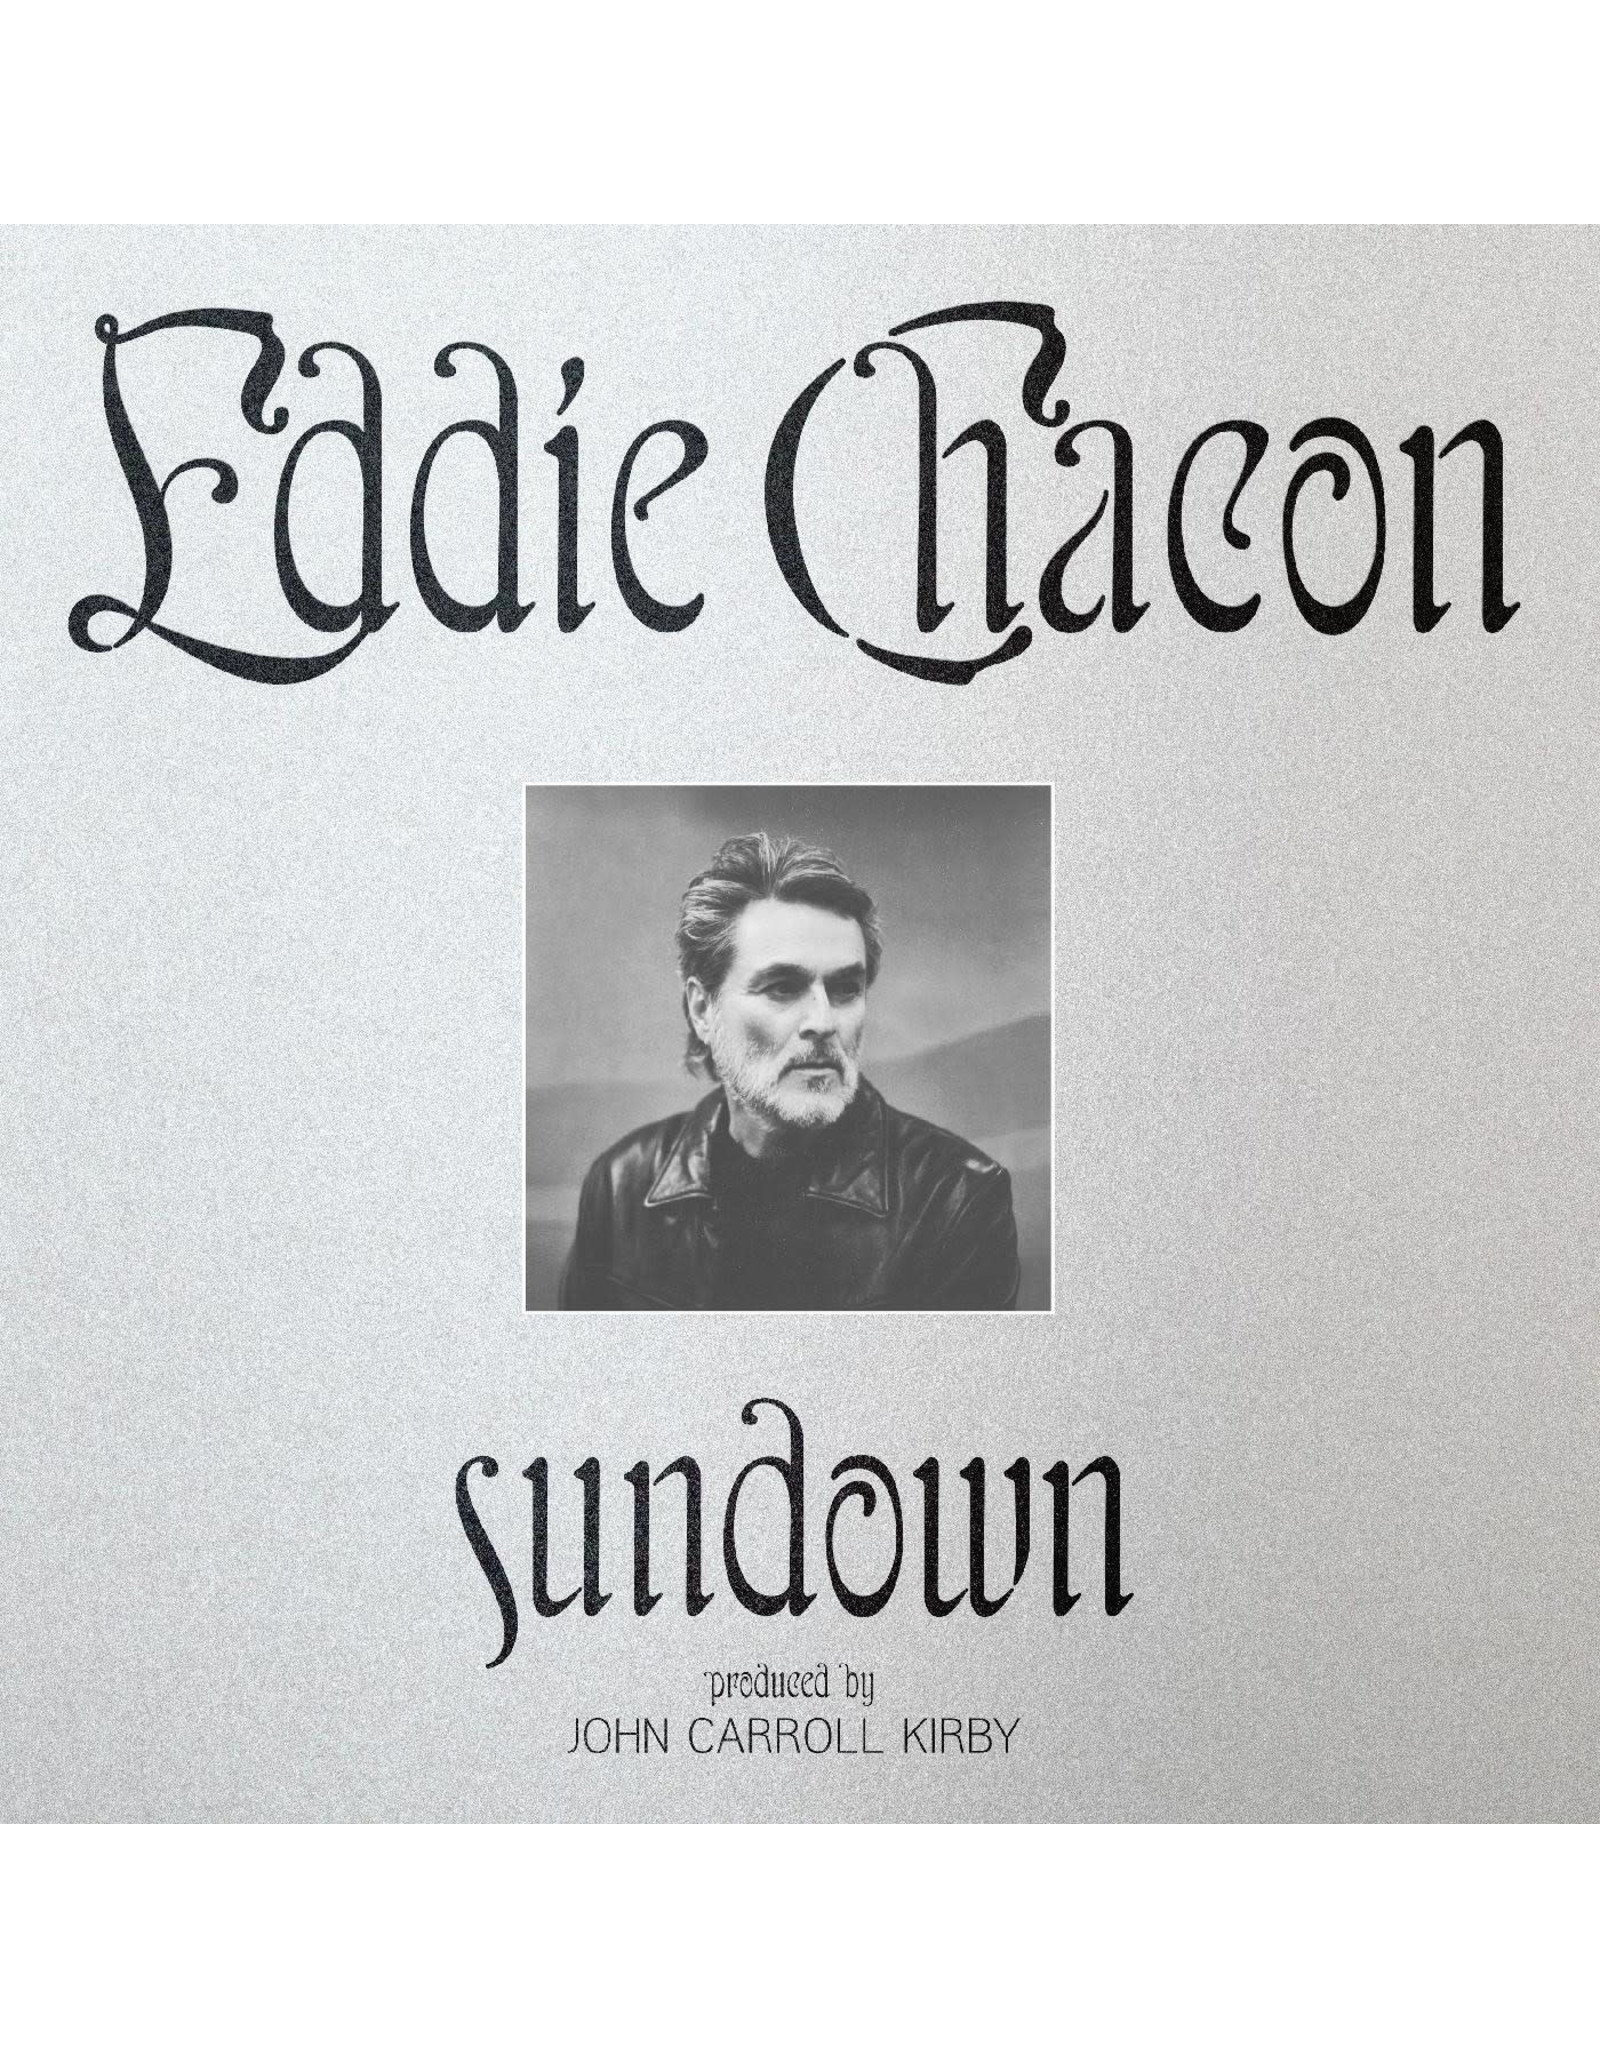 Stoness Throw Chacon, Eddie: Sundown LP